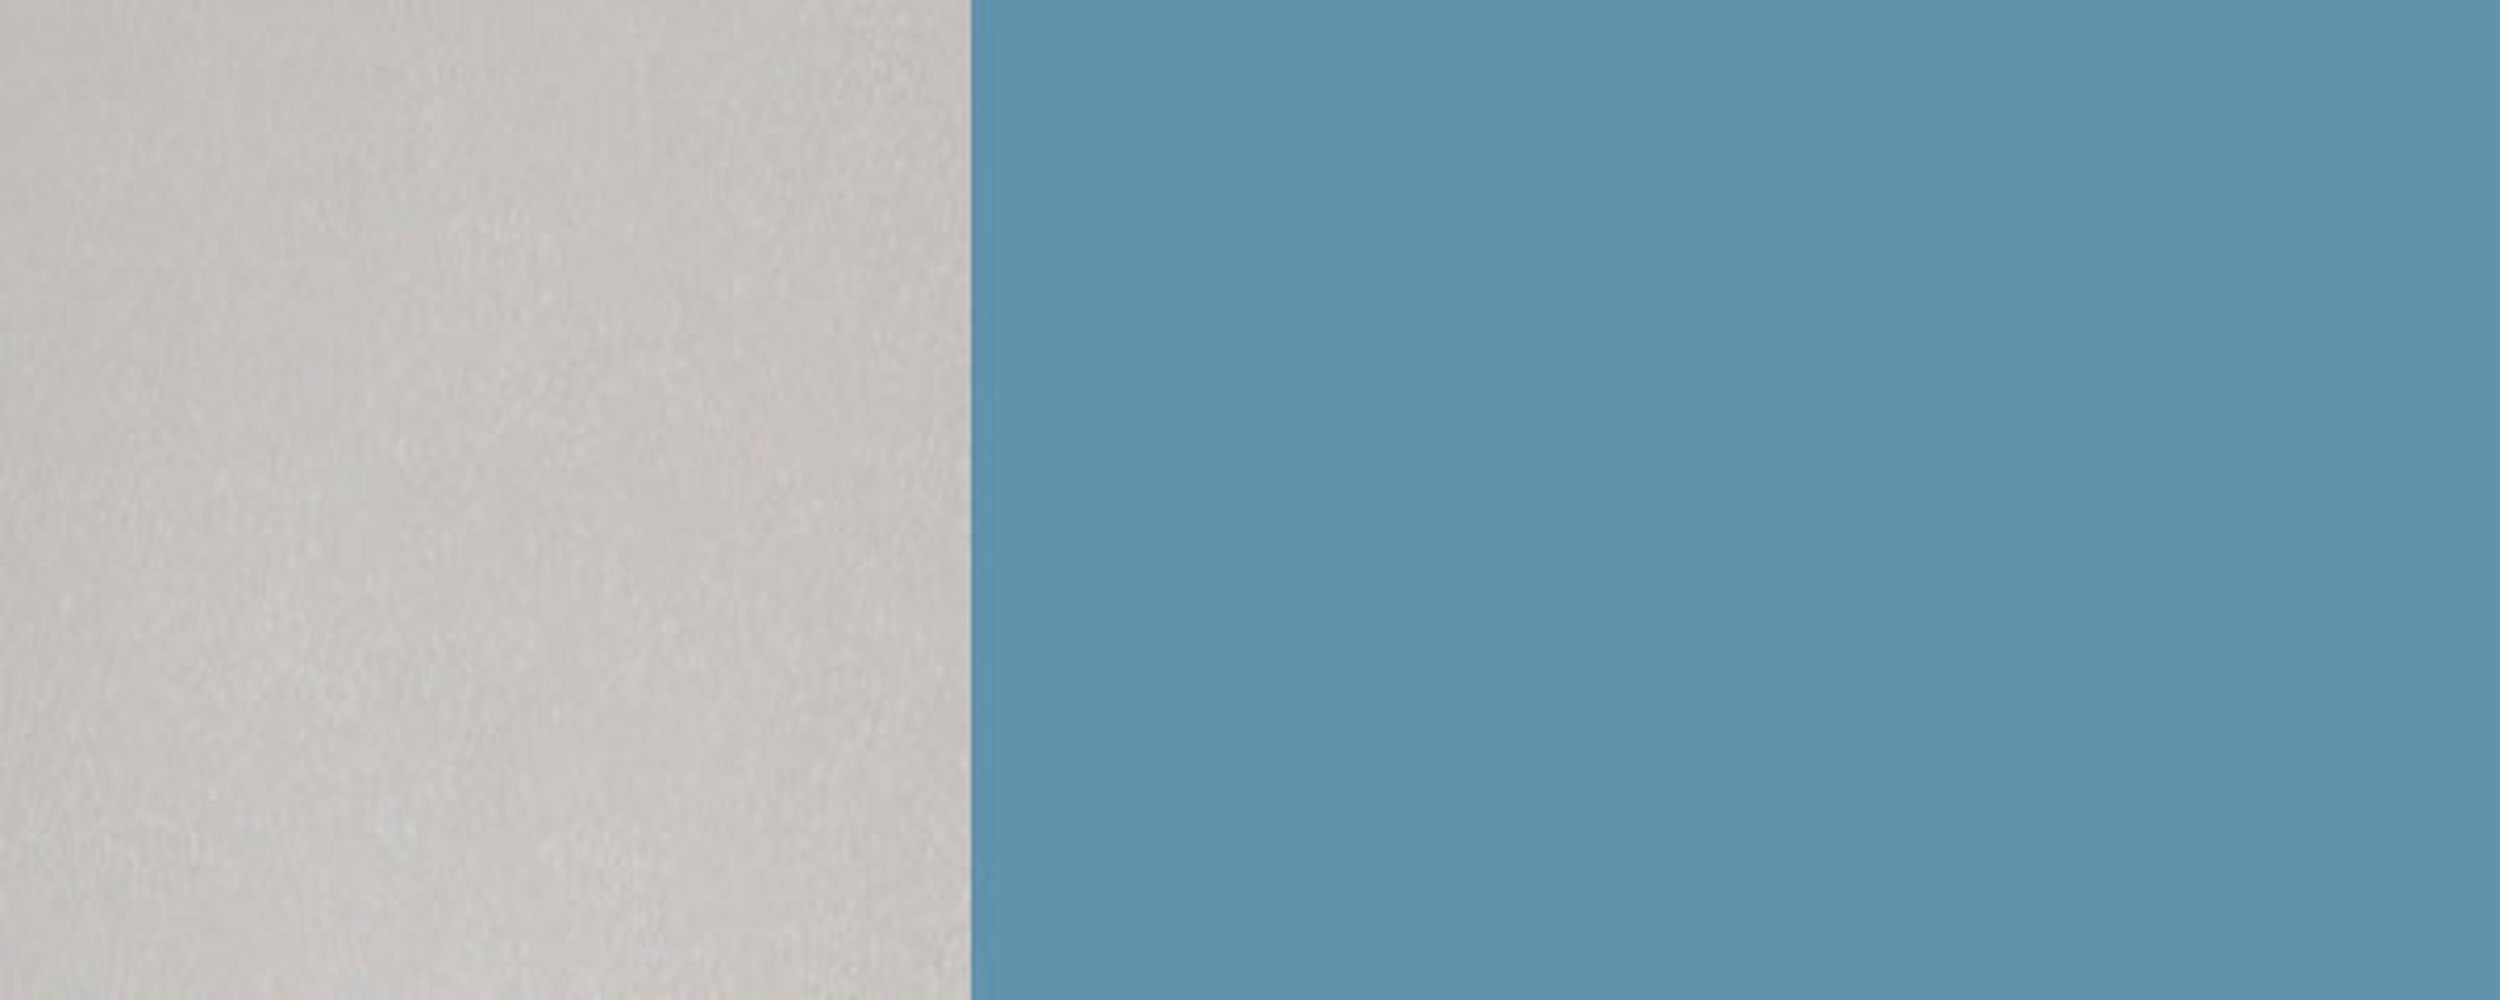 2-türig Front- Feldmann-Wohnen 80cm Unterschrank pastellblau und Rimini RAL (Rimini) matt Korpusfarbe wählbar 5024